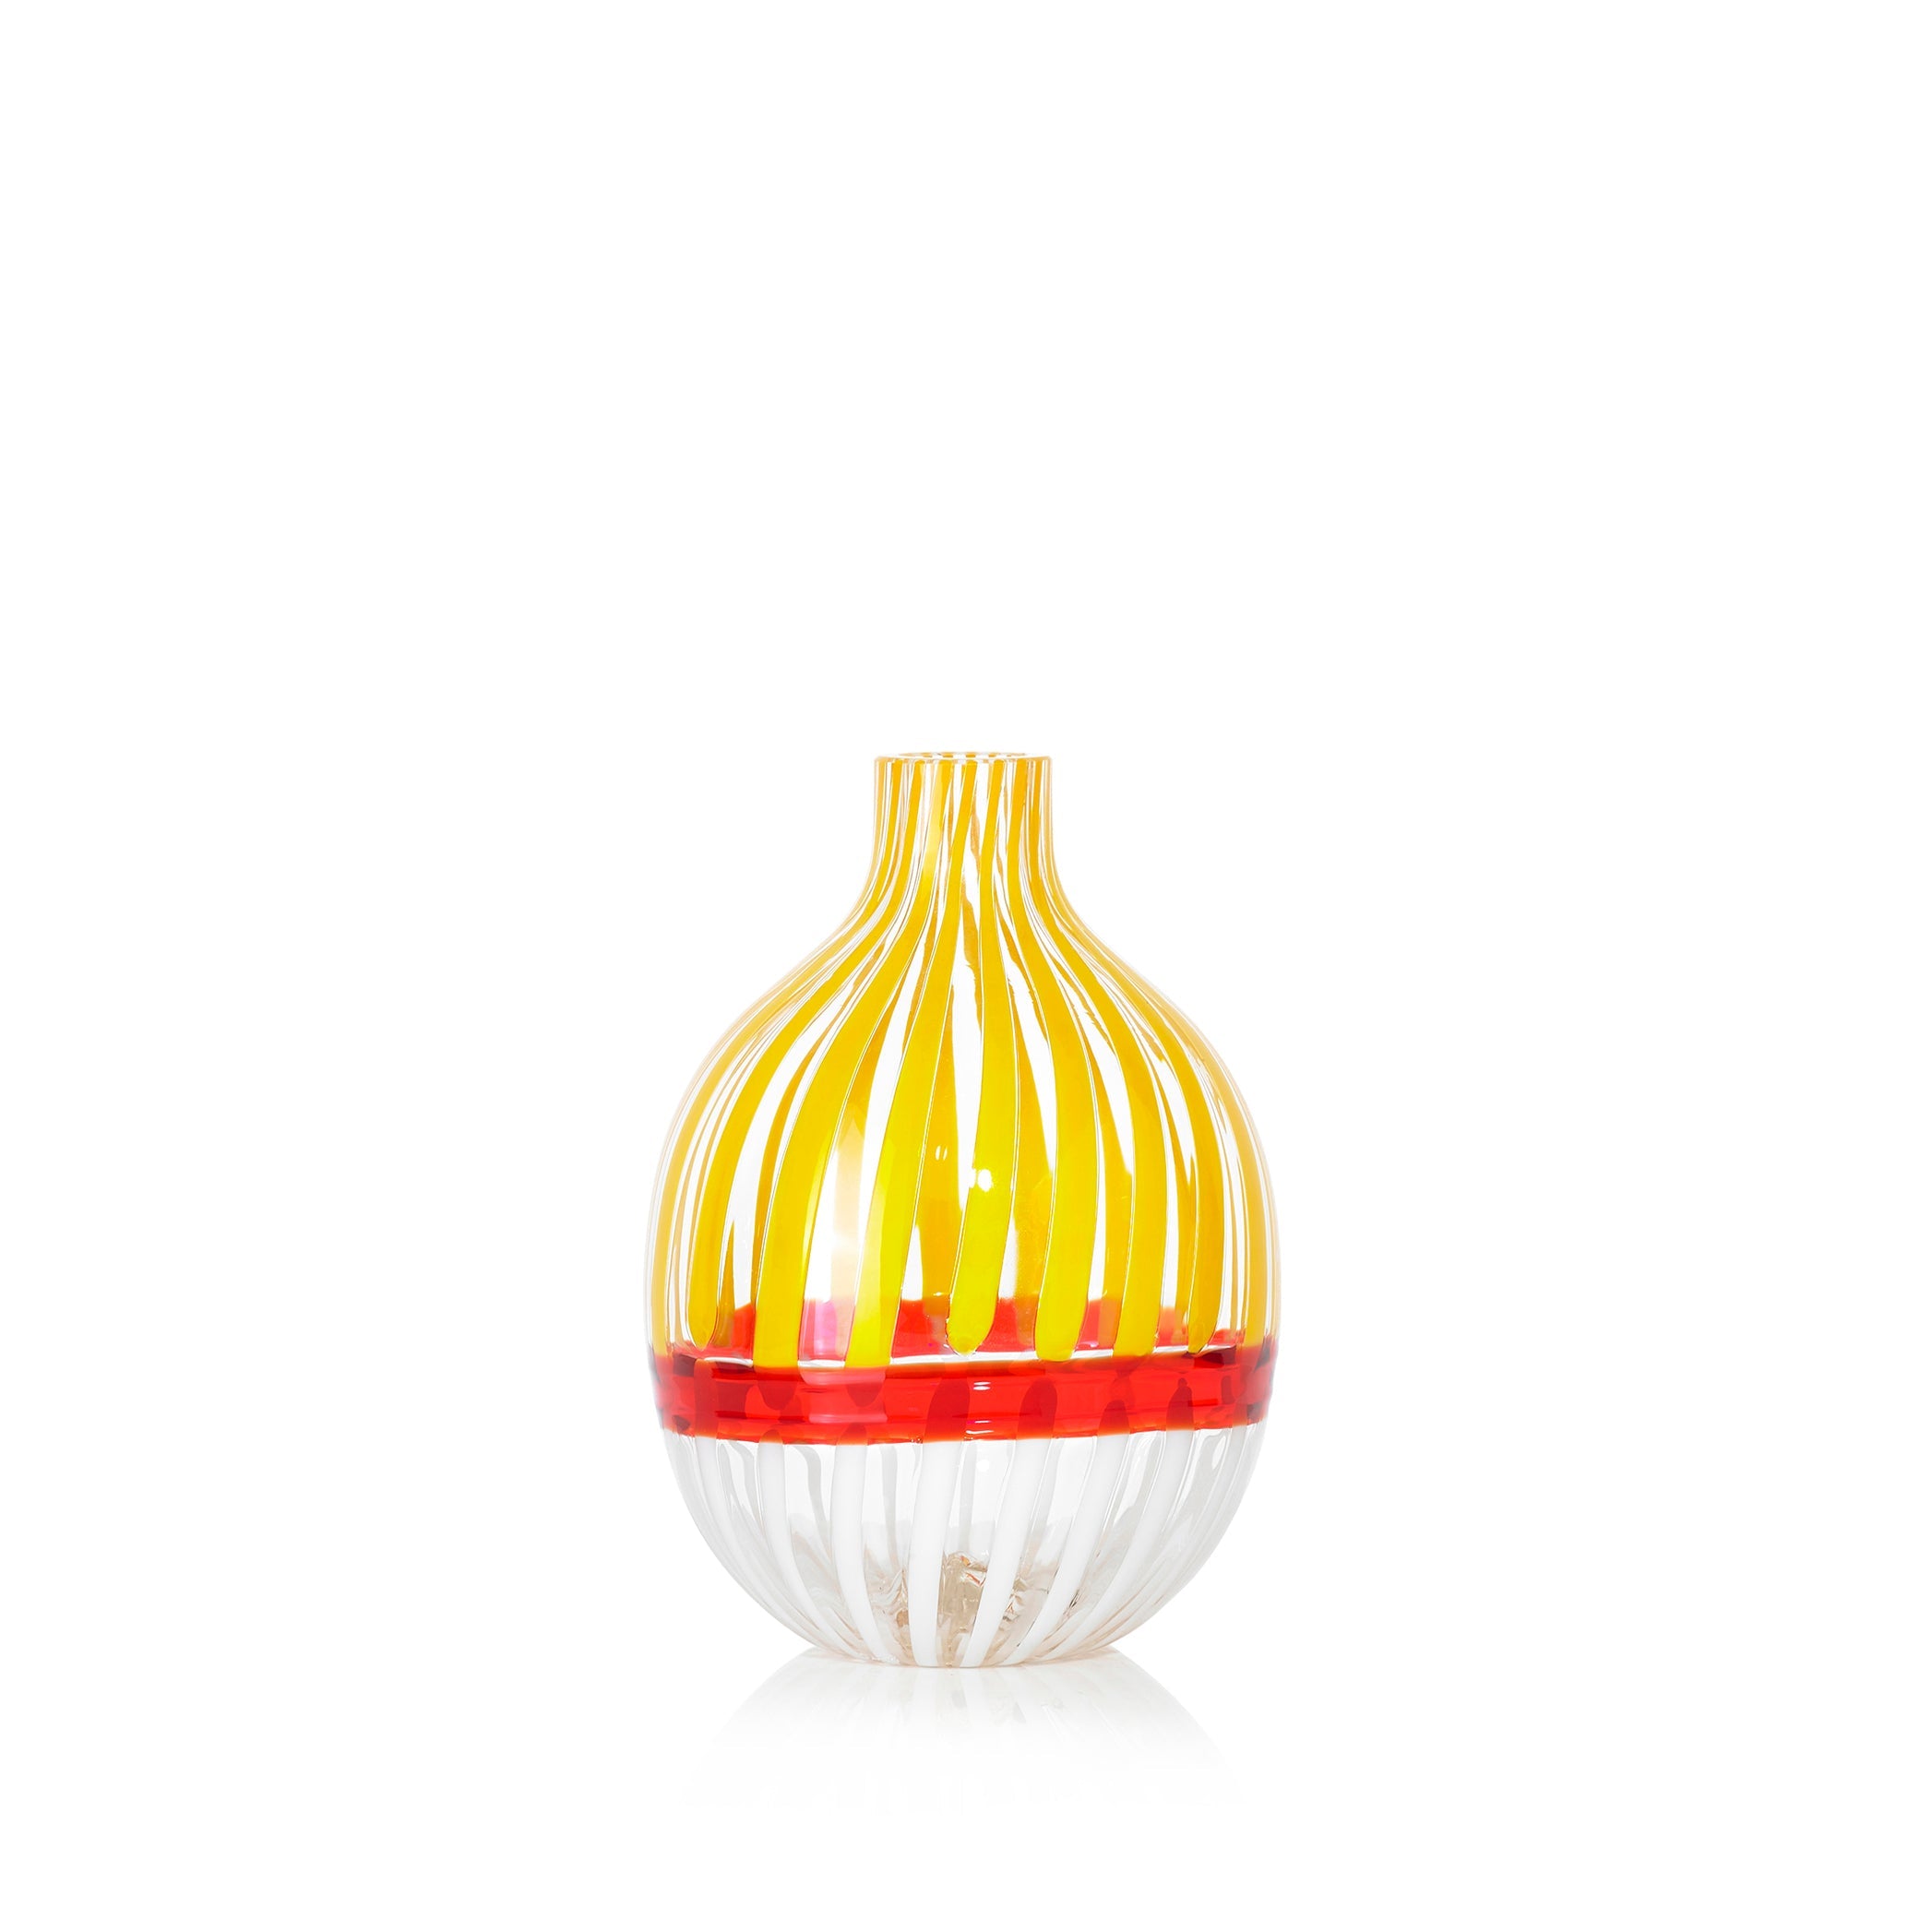 Handblown Double Stripe Glass Vase in Lemon Yellow, Red & White, 18cm